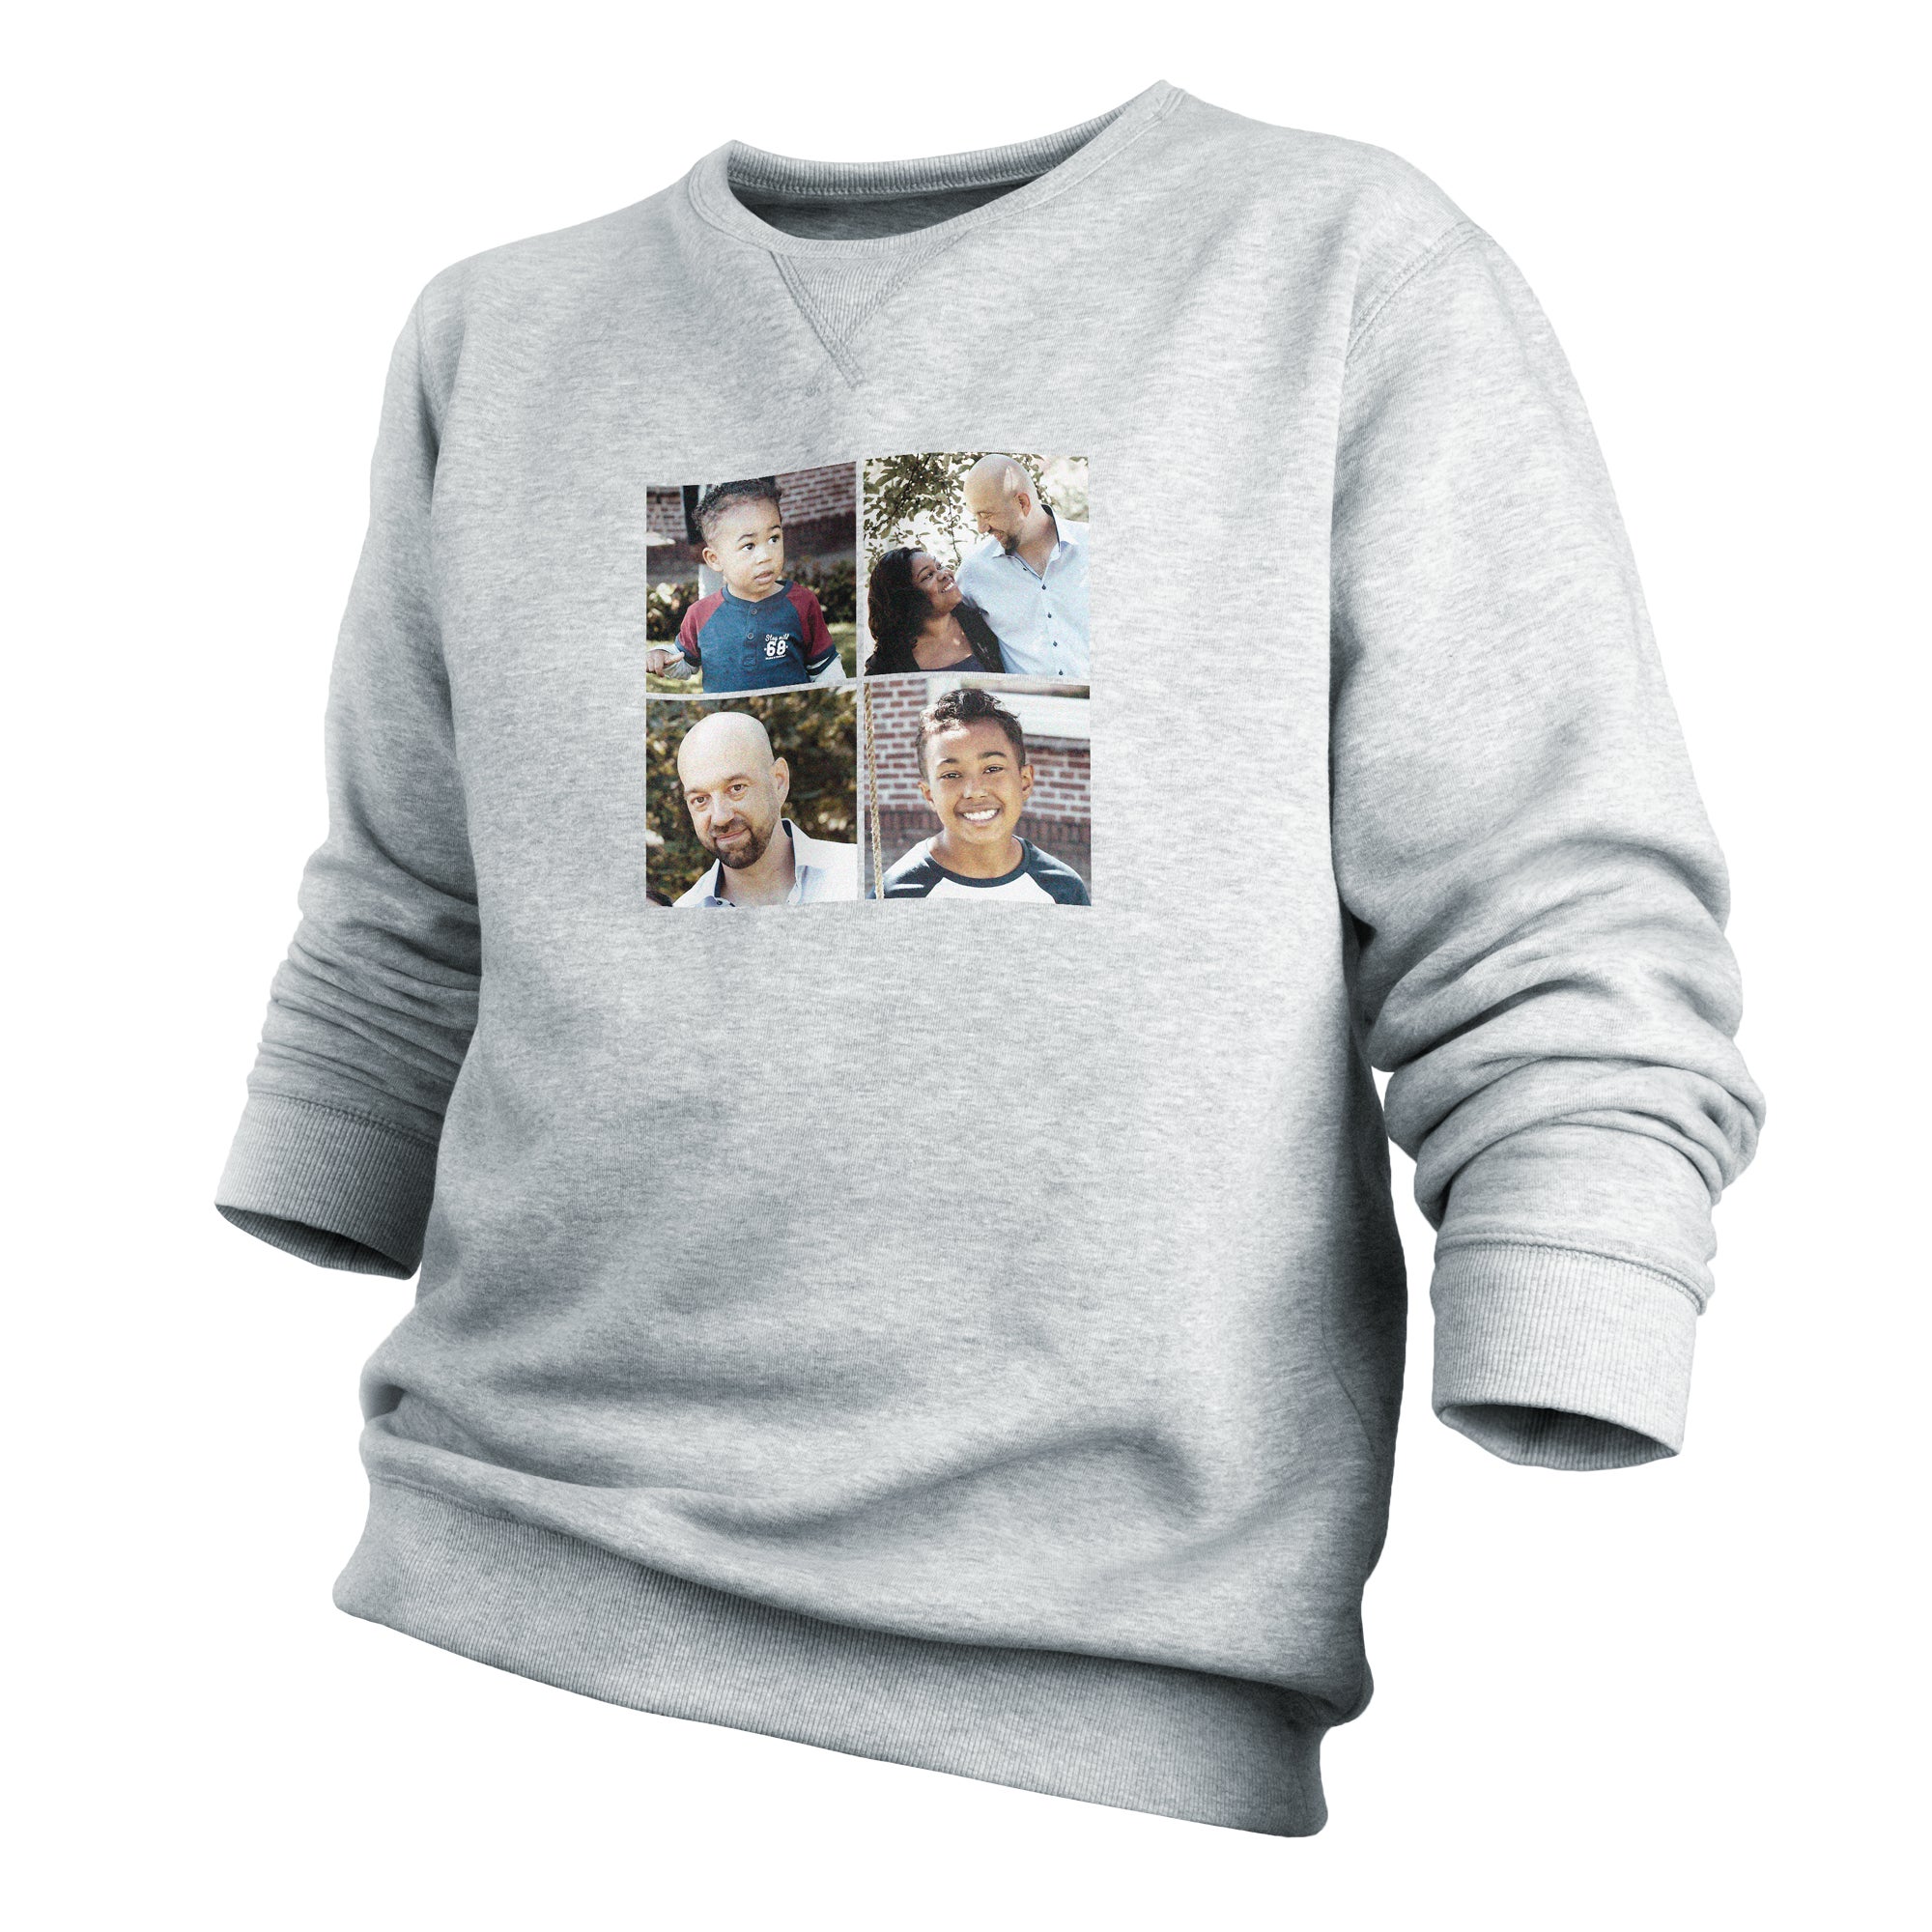 Personalised sweater - Men - Grey - M